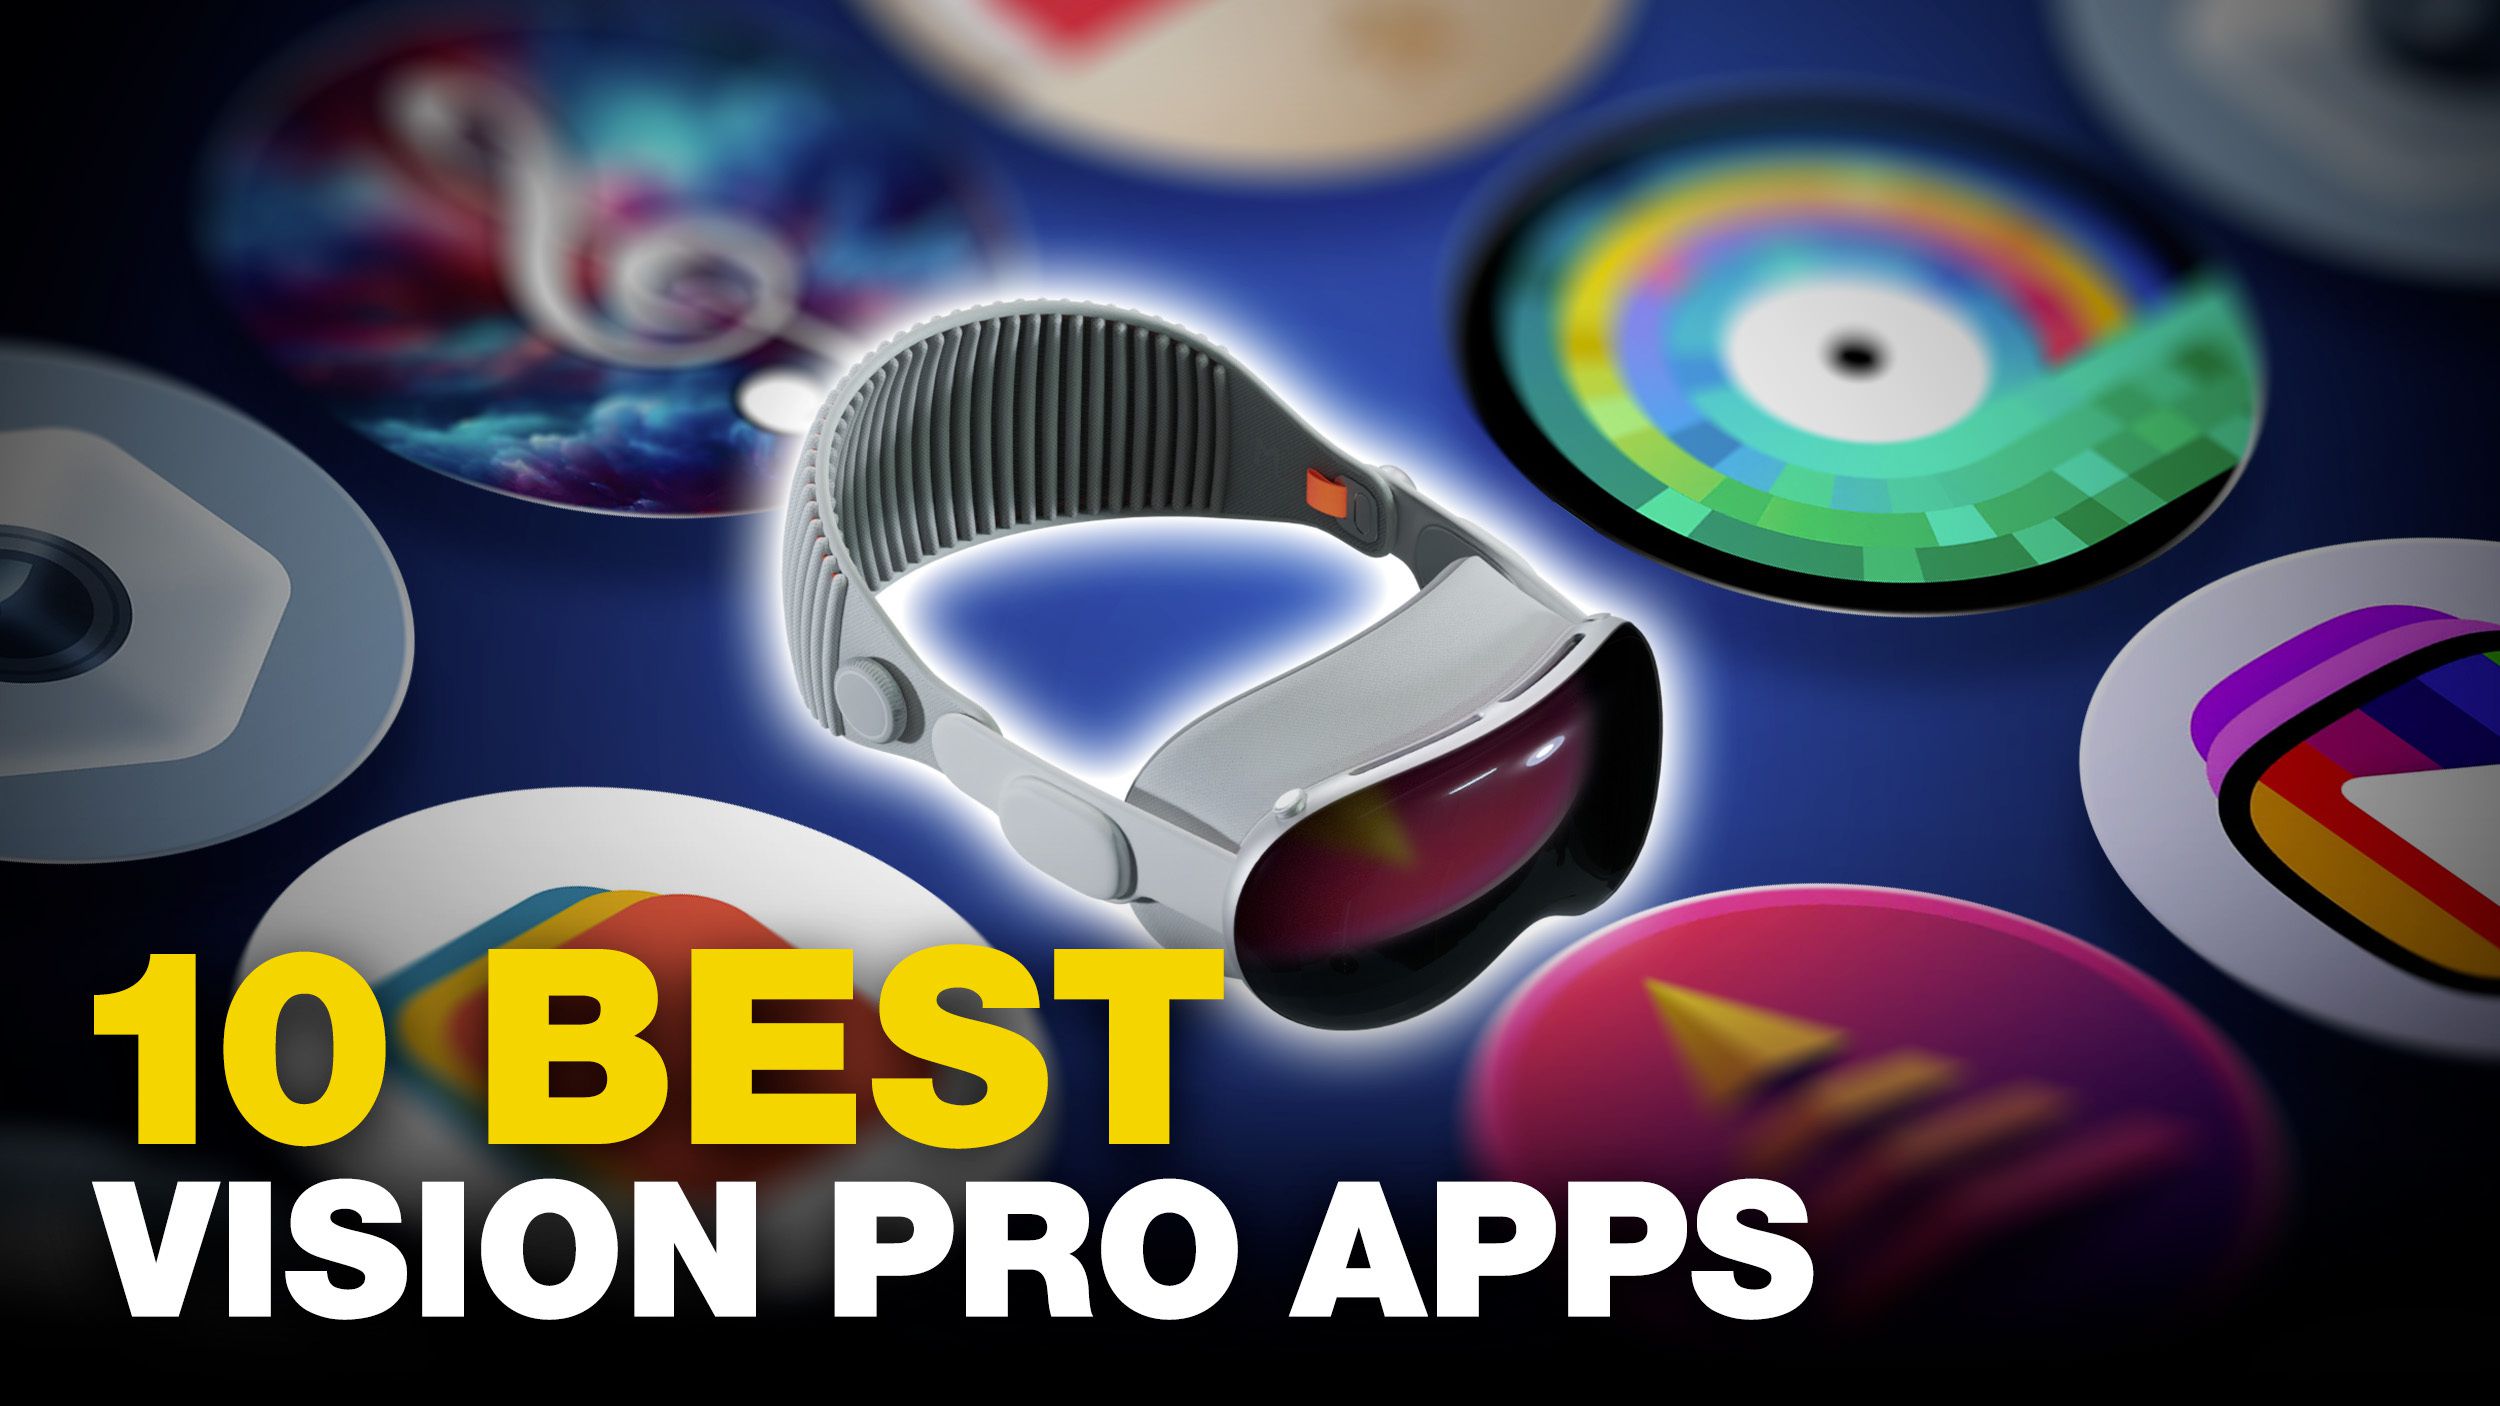 Top 10 Vision Pro Apps - MacRumors